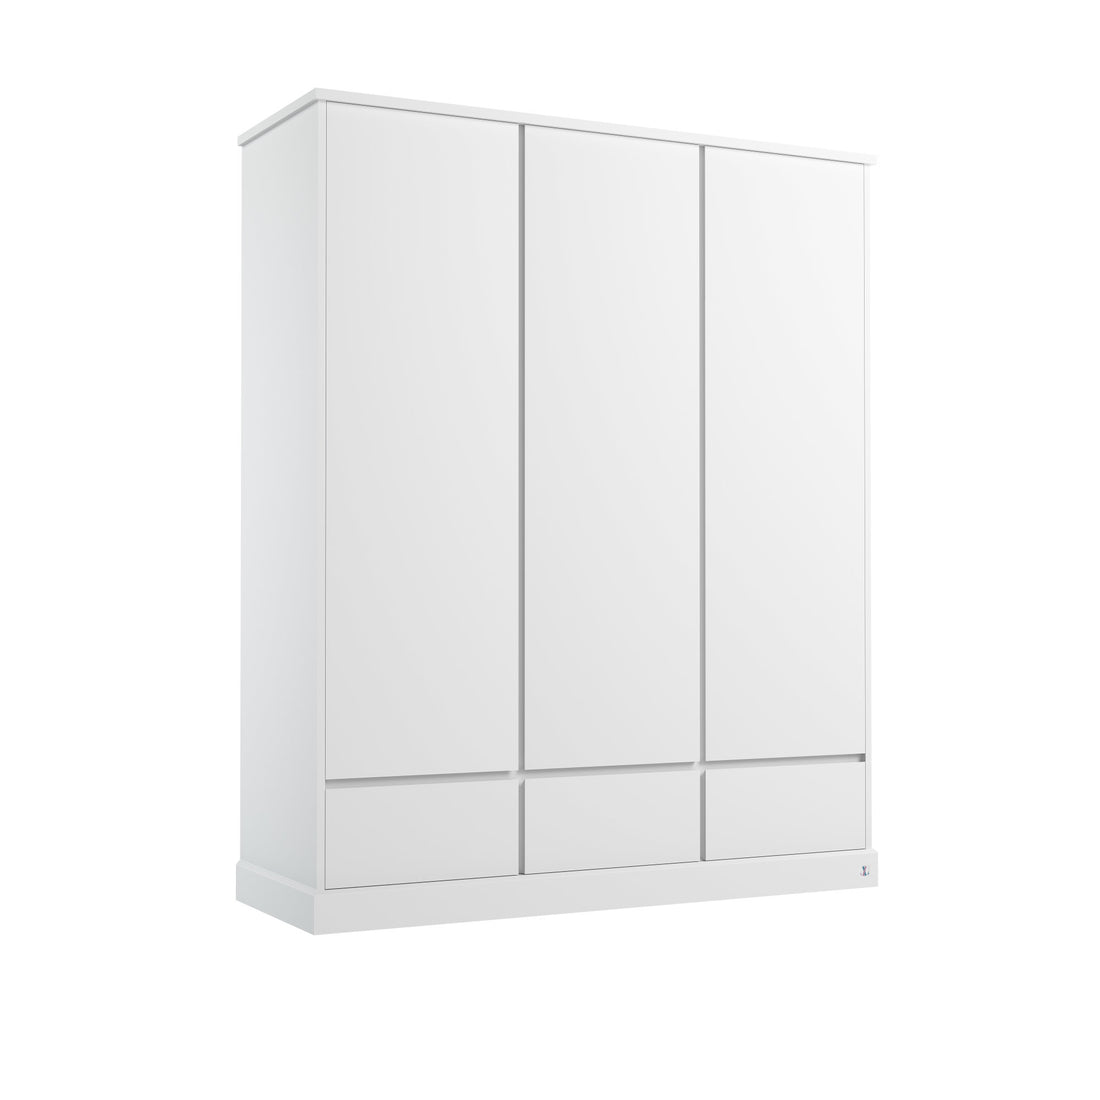 Wardrobe with 3 doors and 3 drawers | Wardrobe PRESTIGE white | PRESTIGE children furniture collection | Modern wardrobe with 3 doors